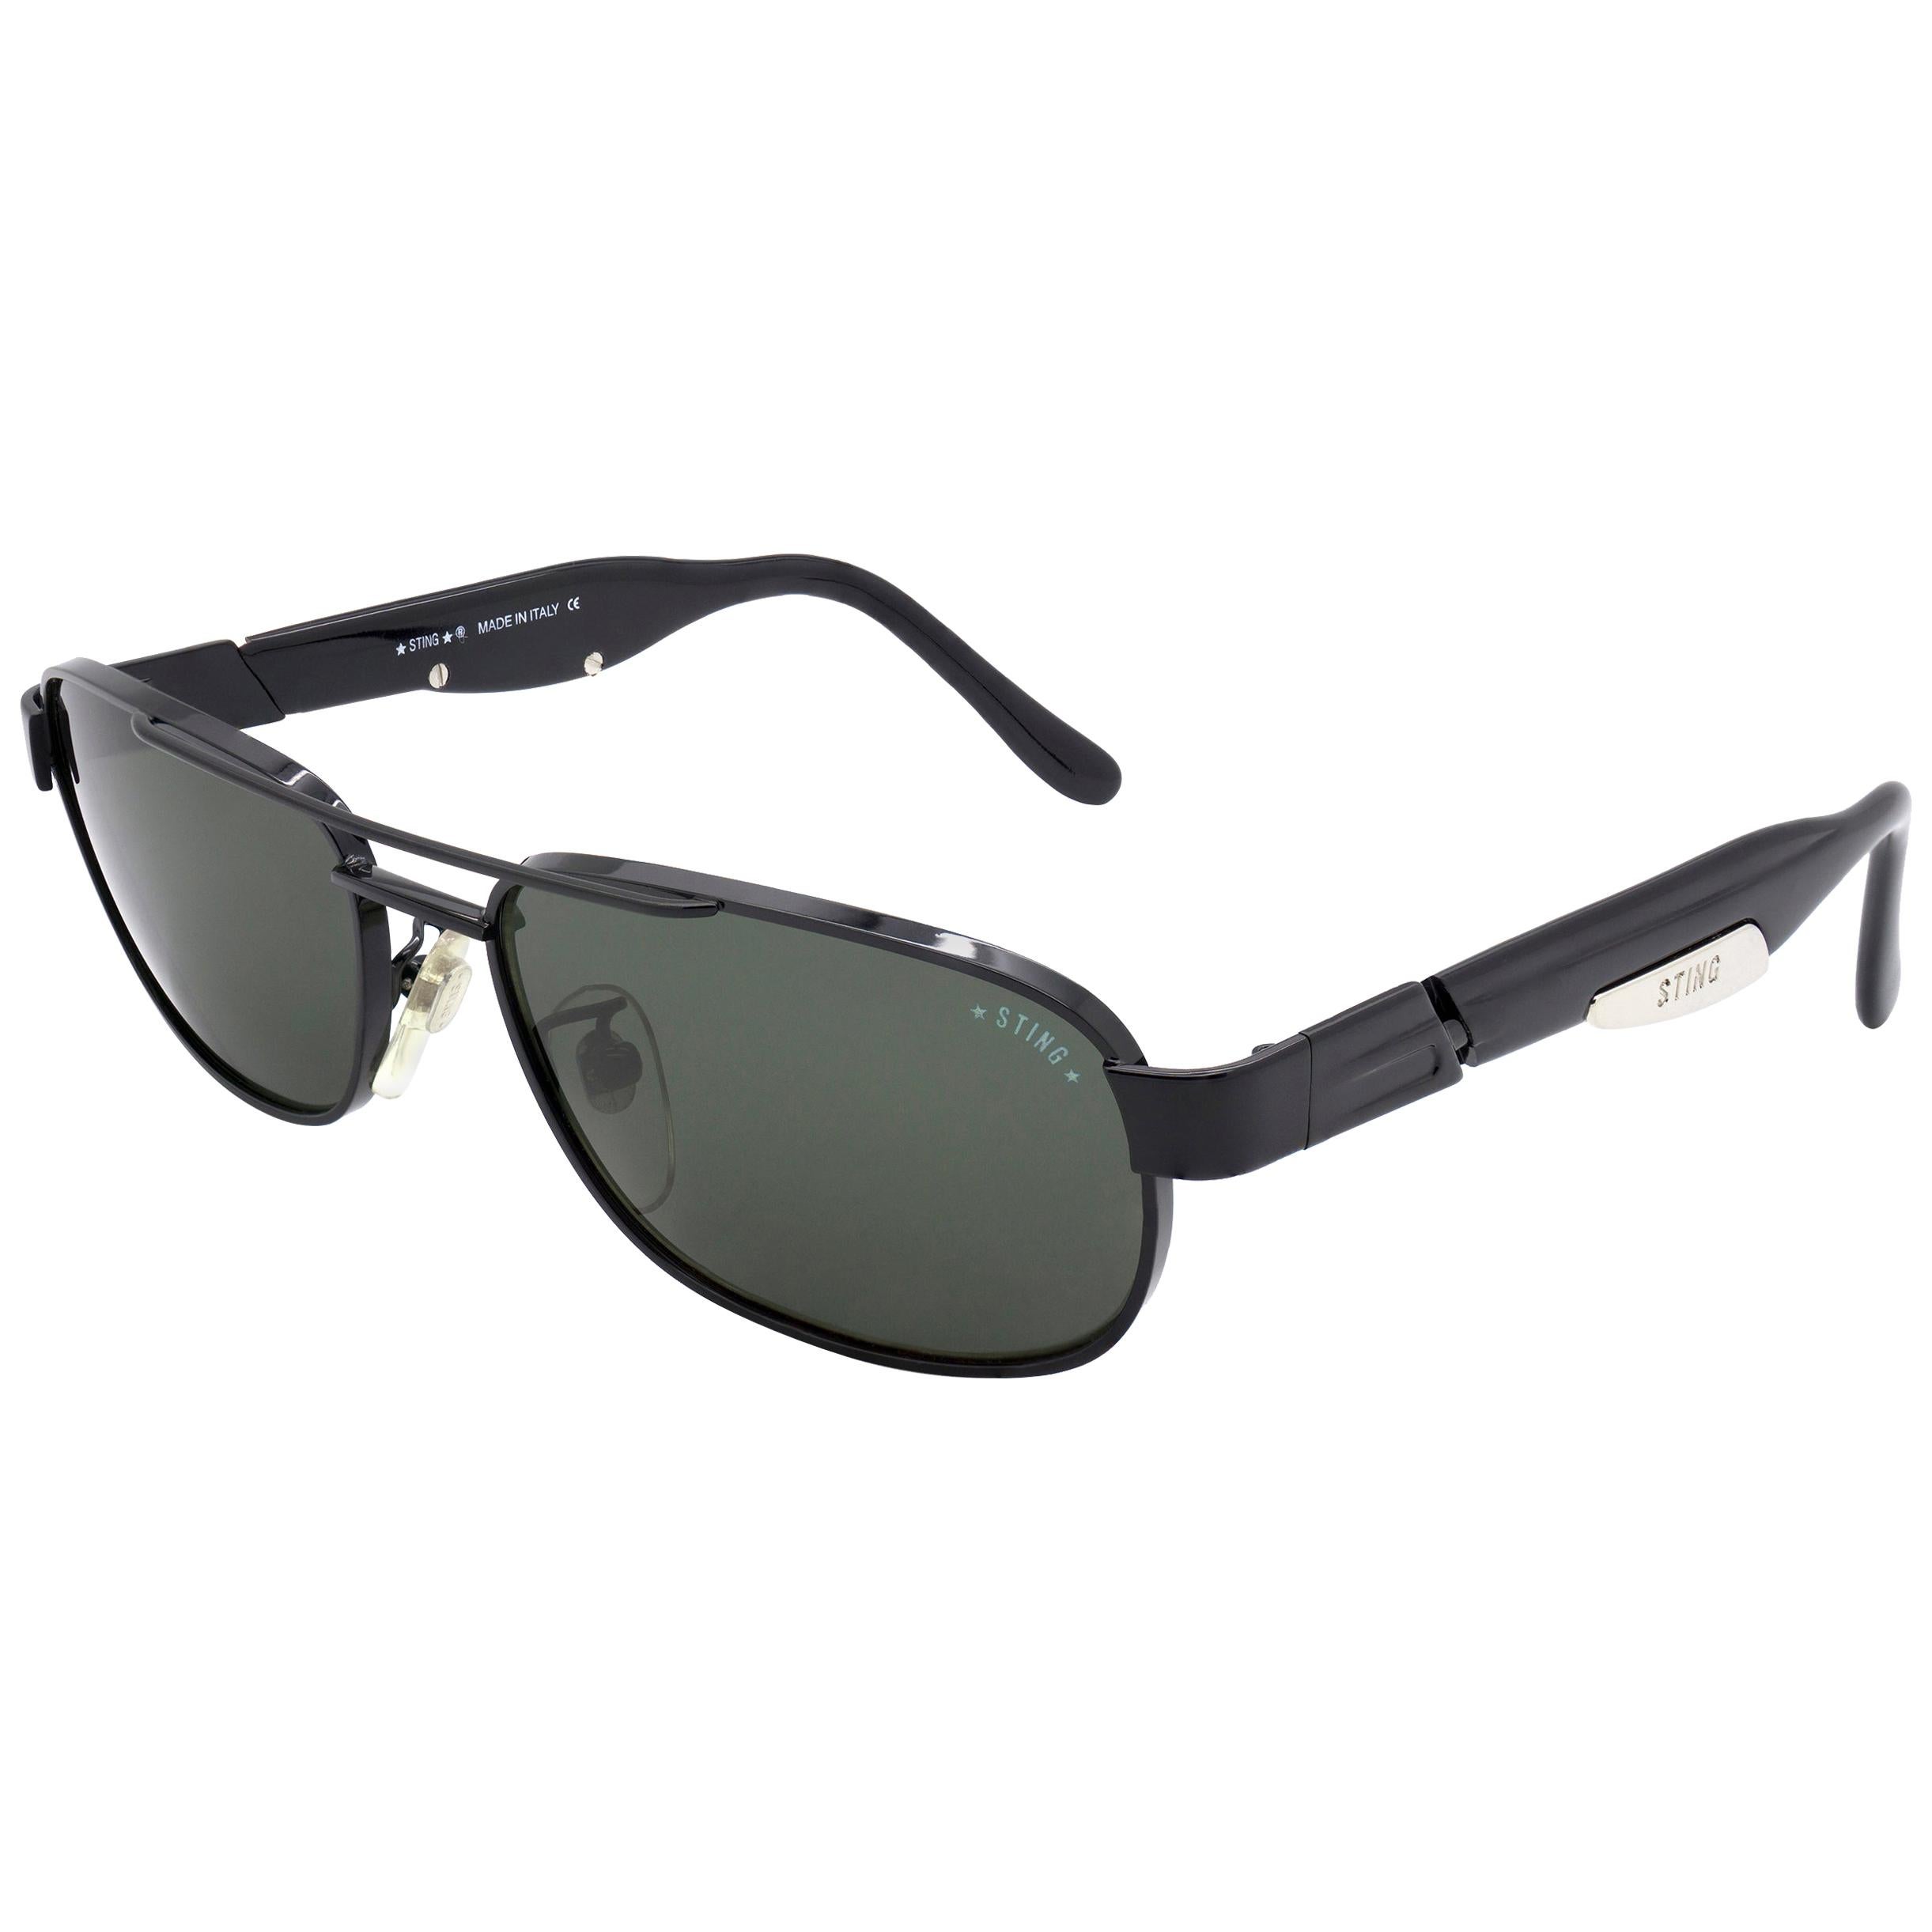 Sting black aviator sunglasses, Italy 90s For Sale